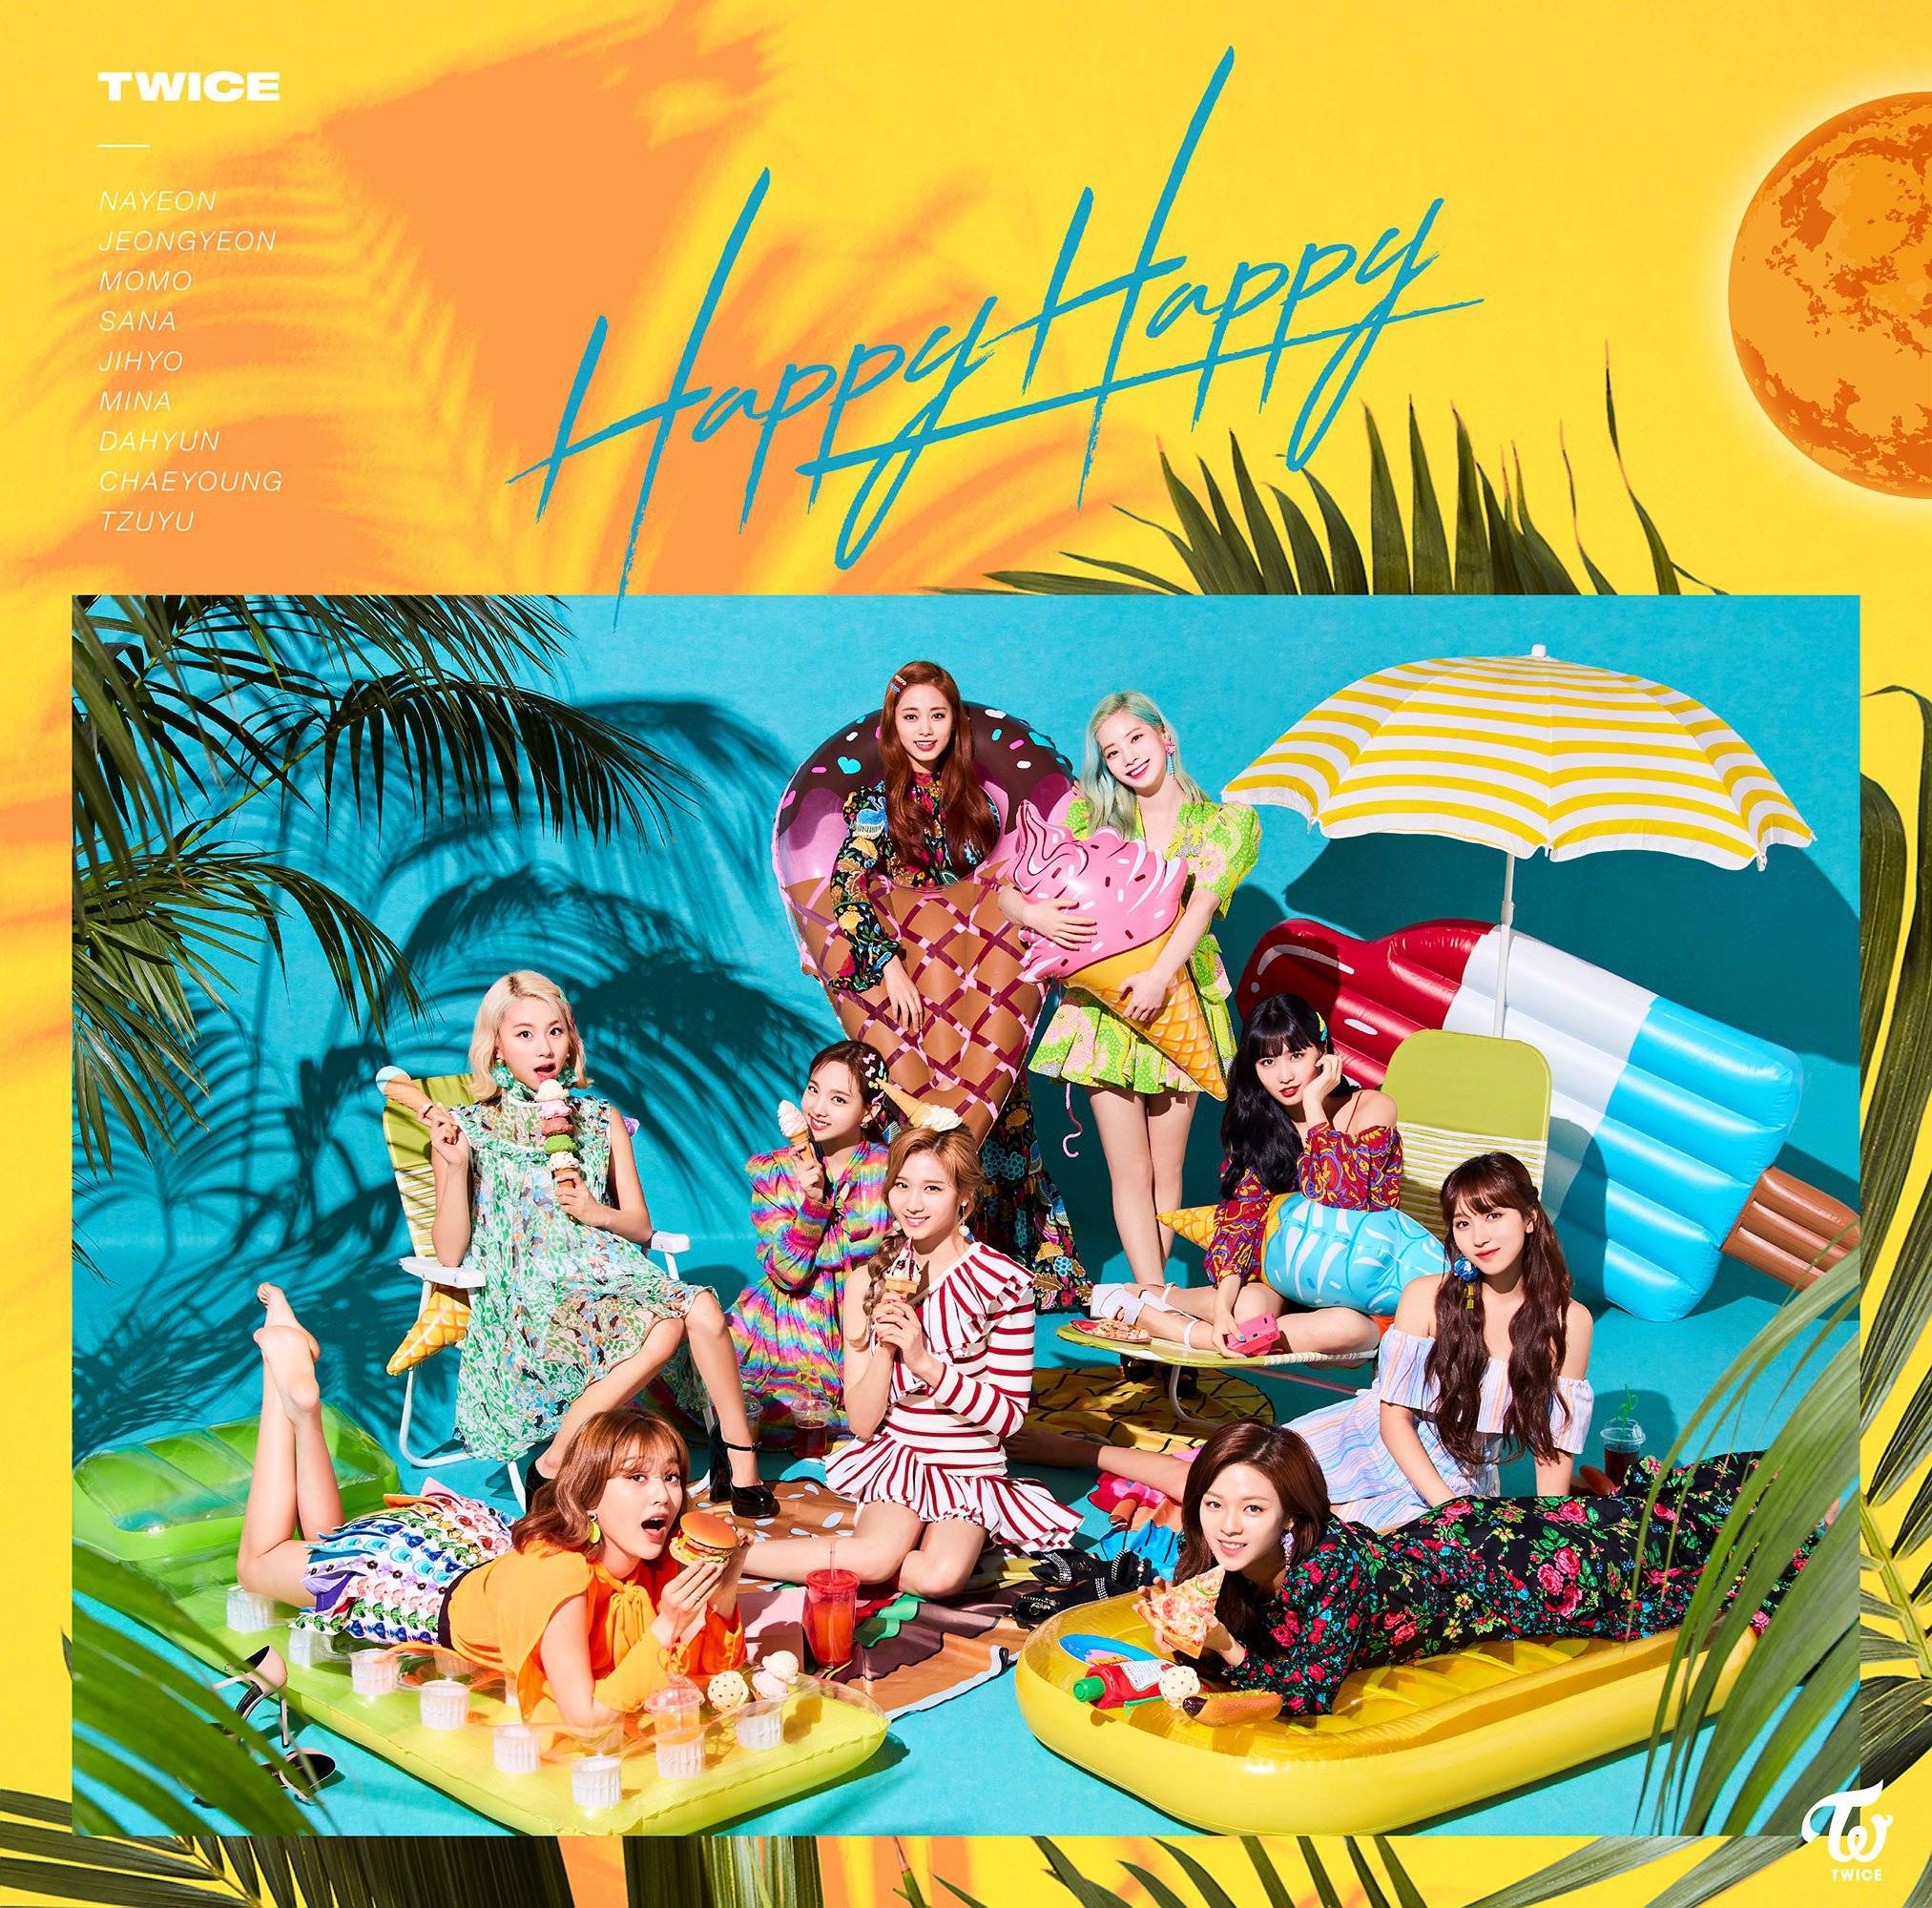 TWICE - HAPPY HAPPY - Reviews - Album of The Year